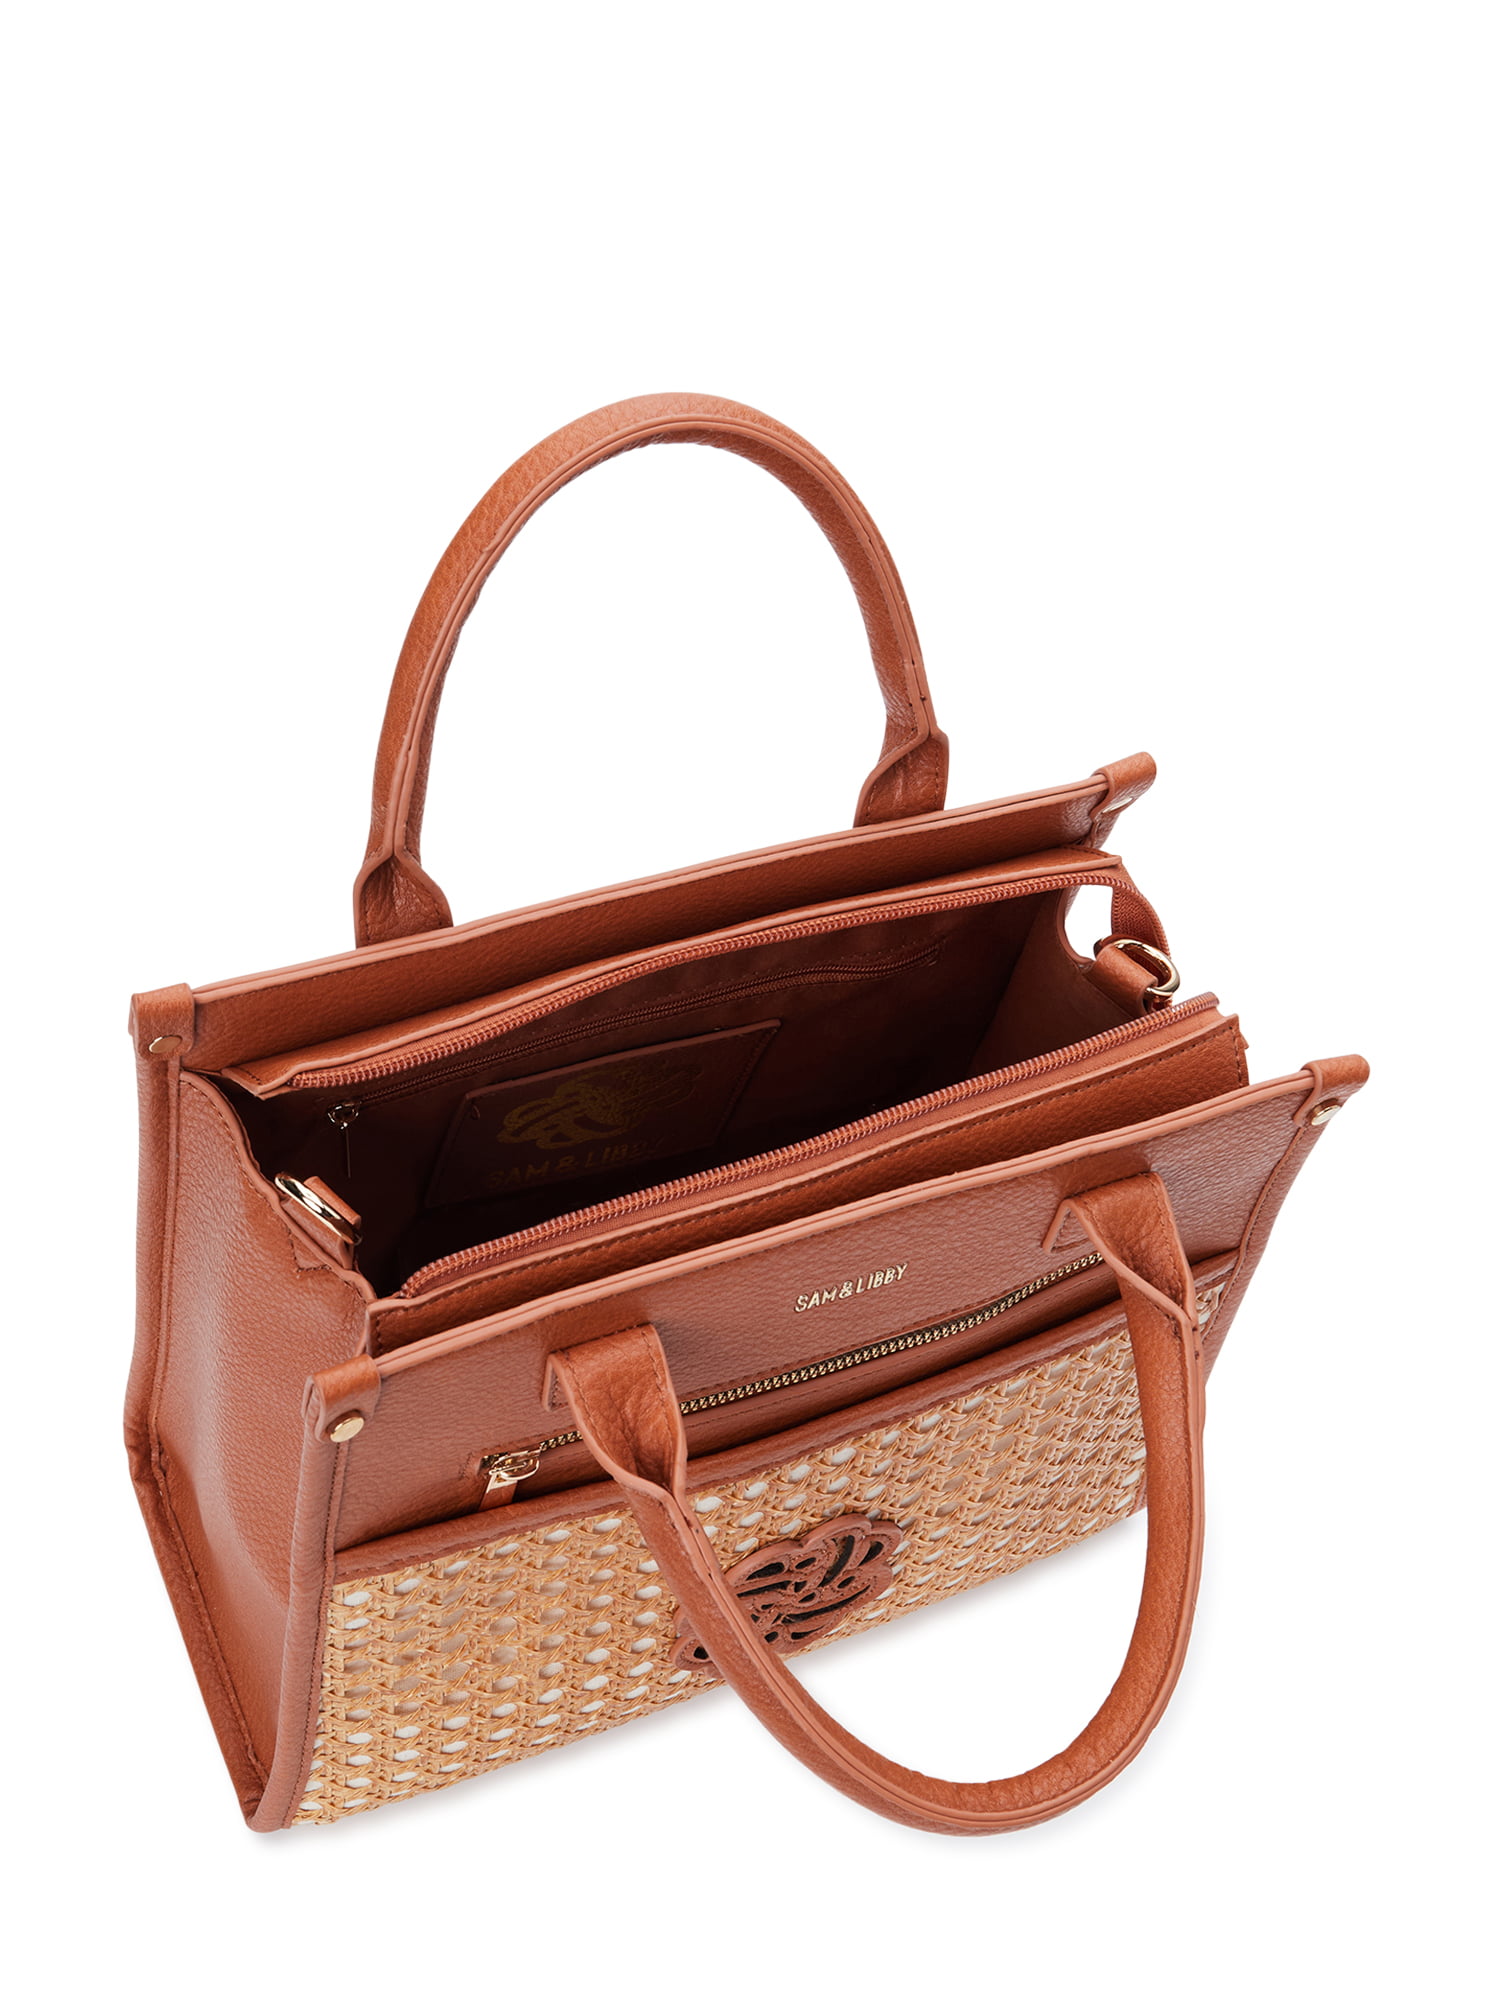 Sam & Libby Small Bags & Handbags for Women for sale | eBay